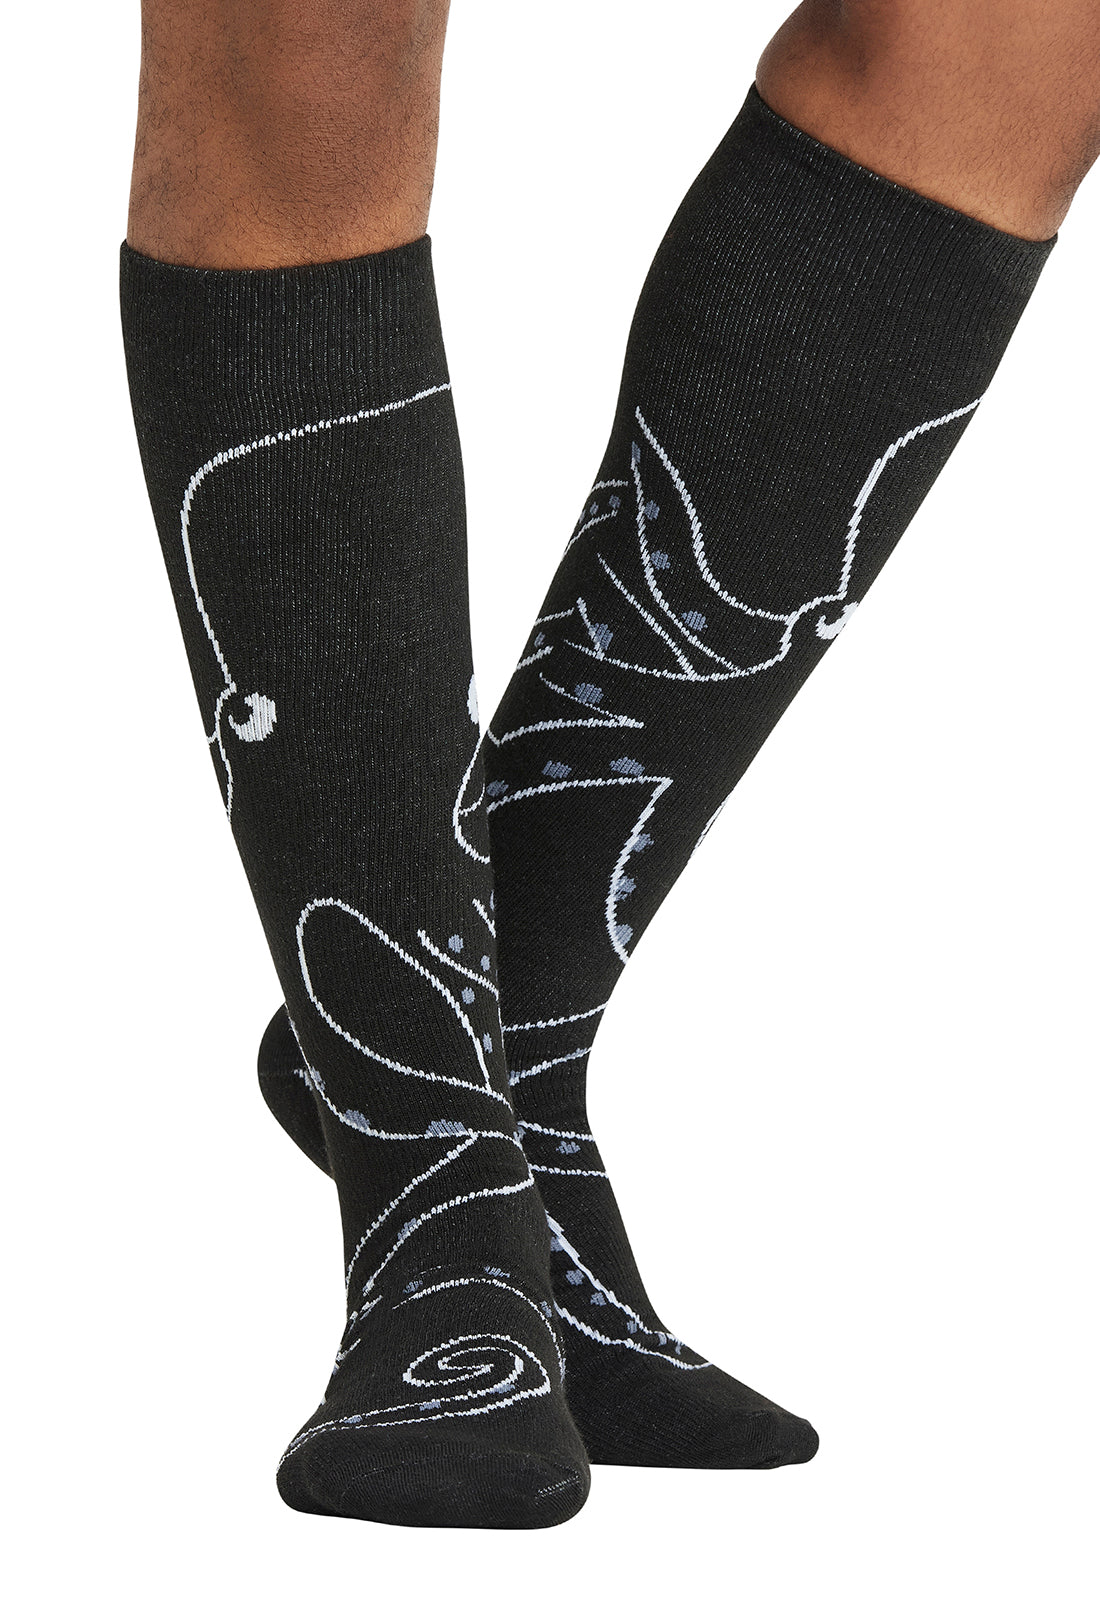 Men's Compression Socks for sale in Culiacán, Sinaloa